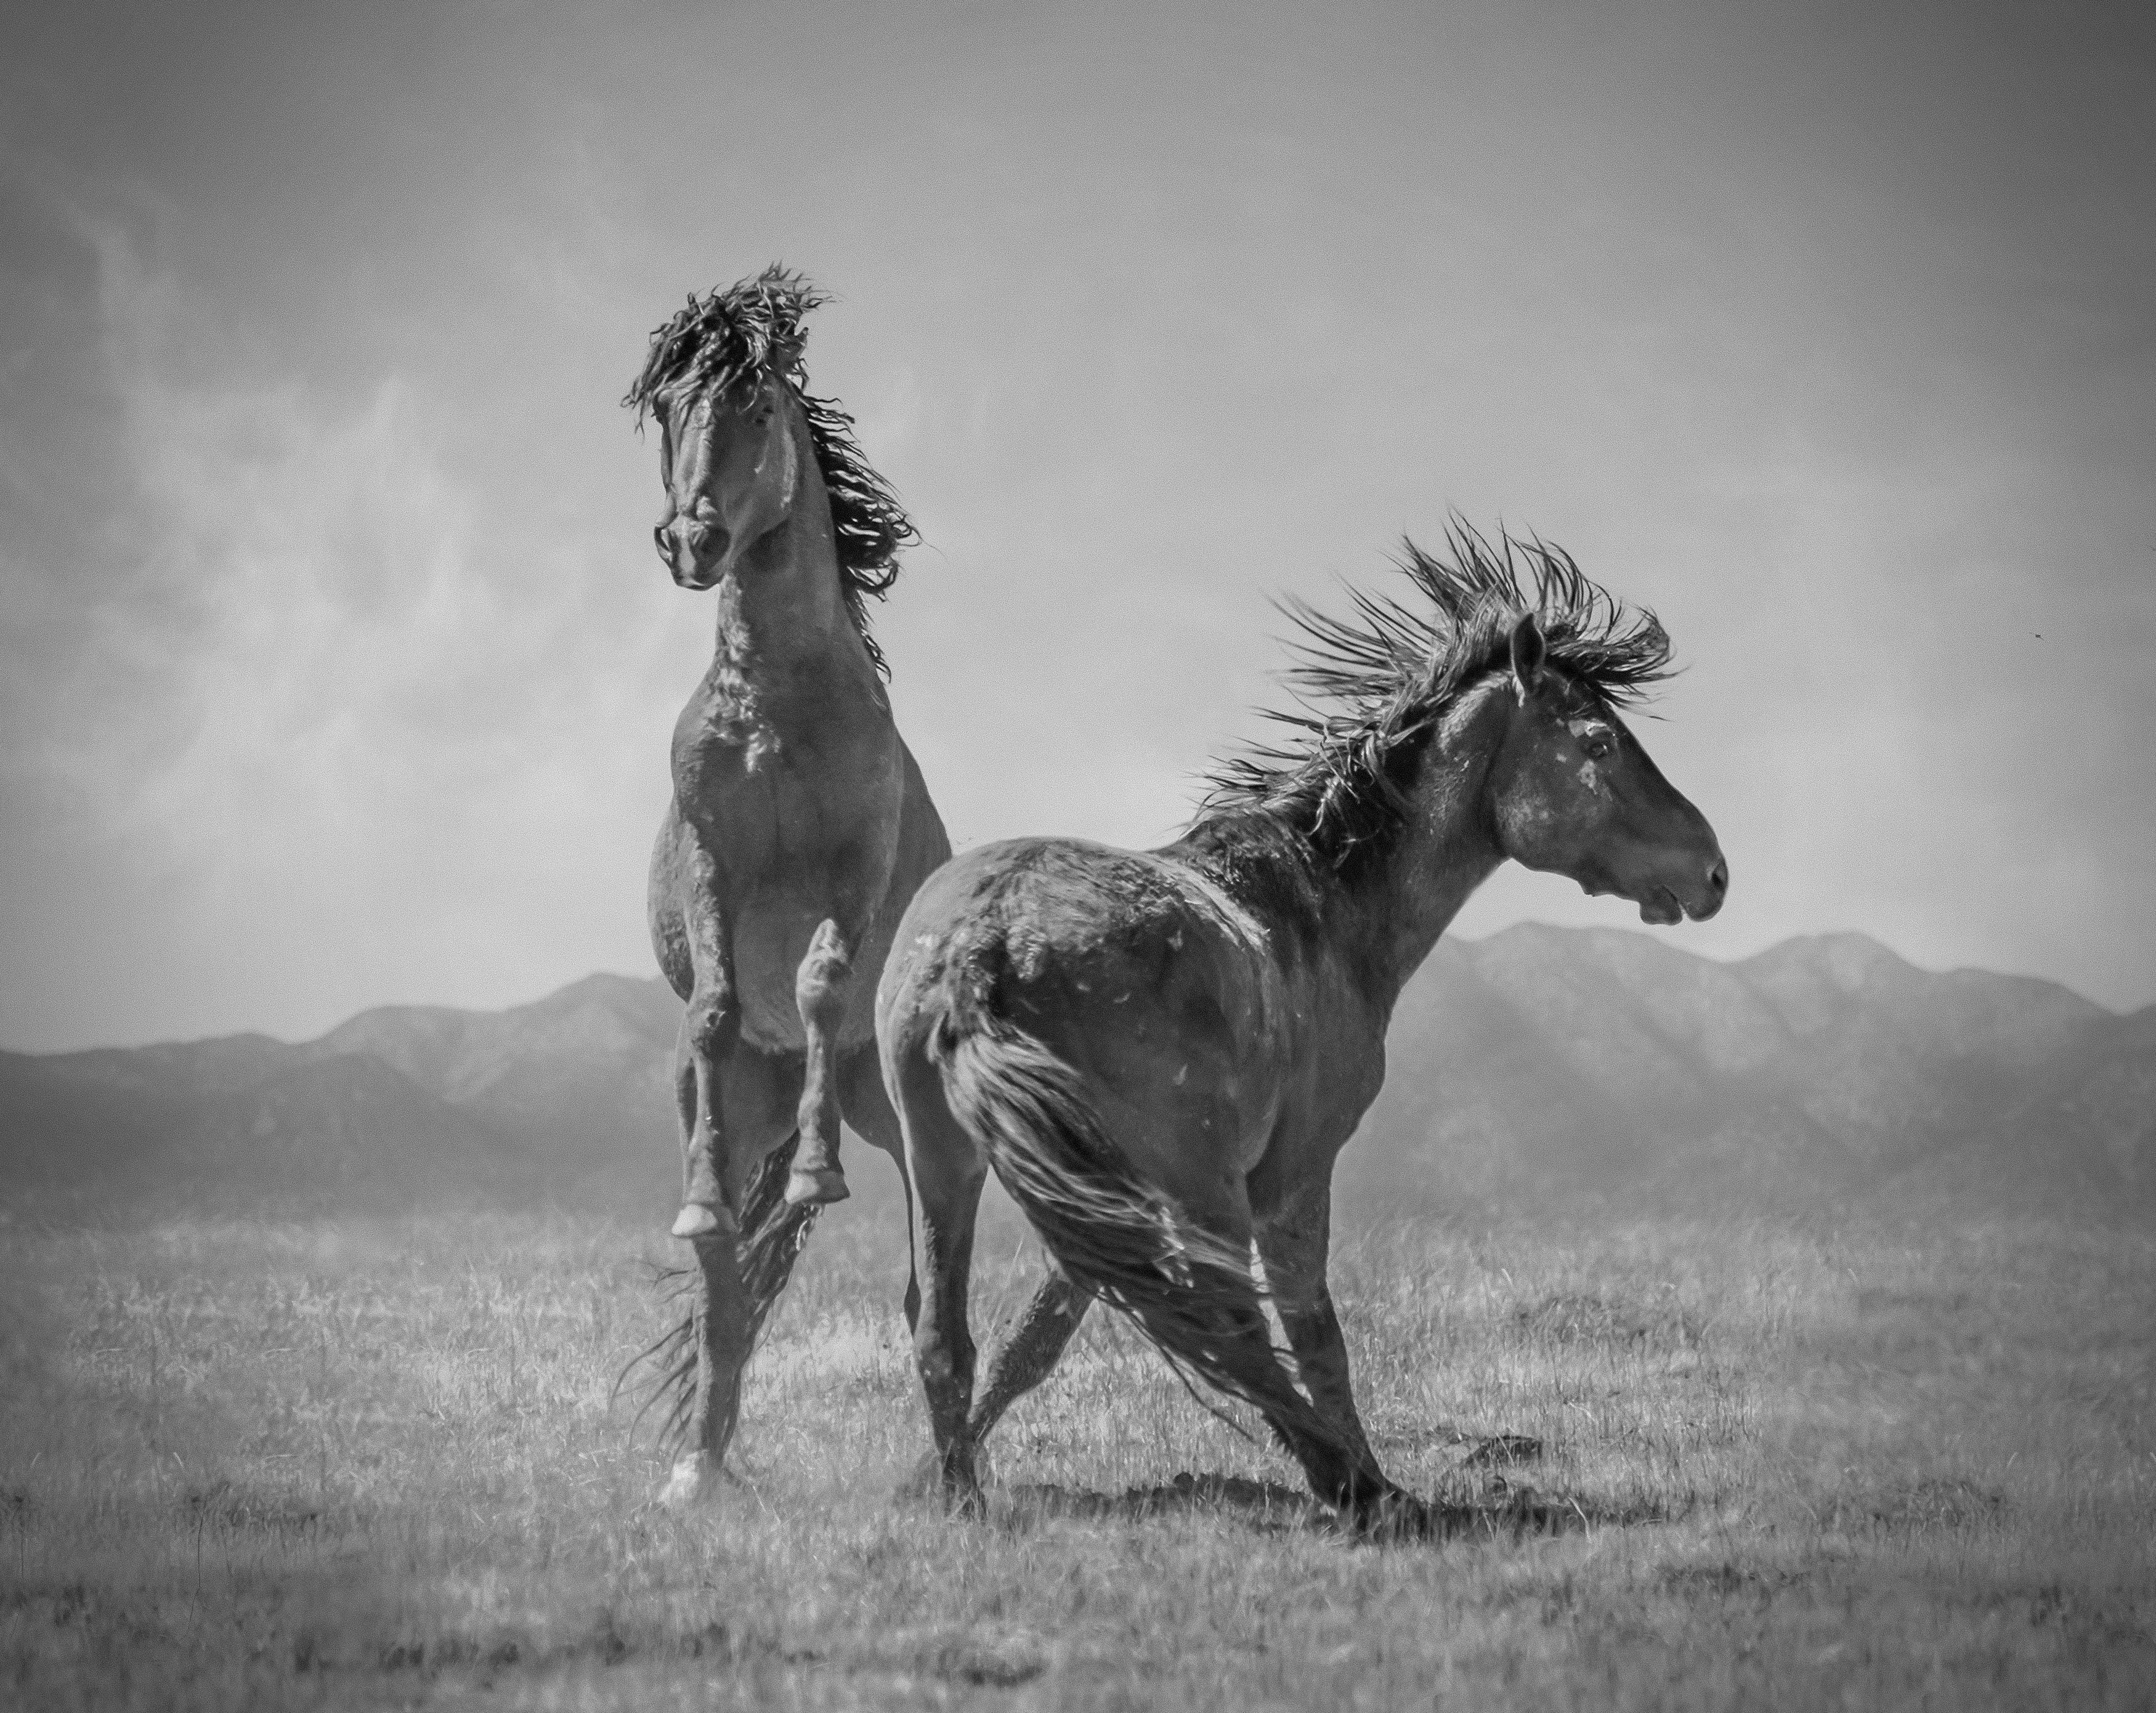 Animal Print Shane Russeck - "Wonder Horses" 28x40 - Photographie noir et blanc, chevaux sauvages Mustangs 